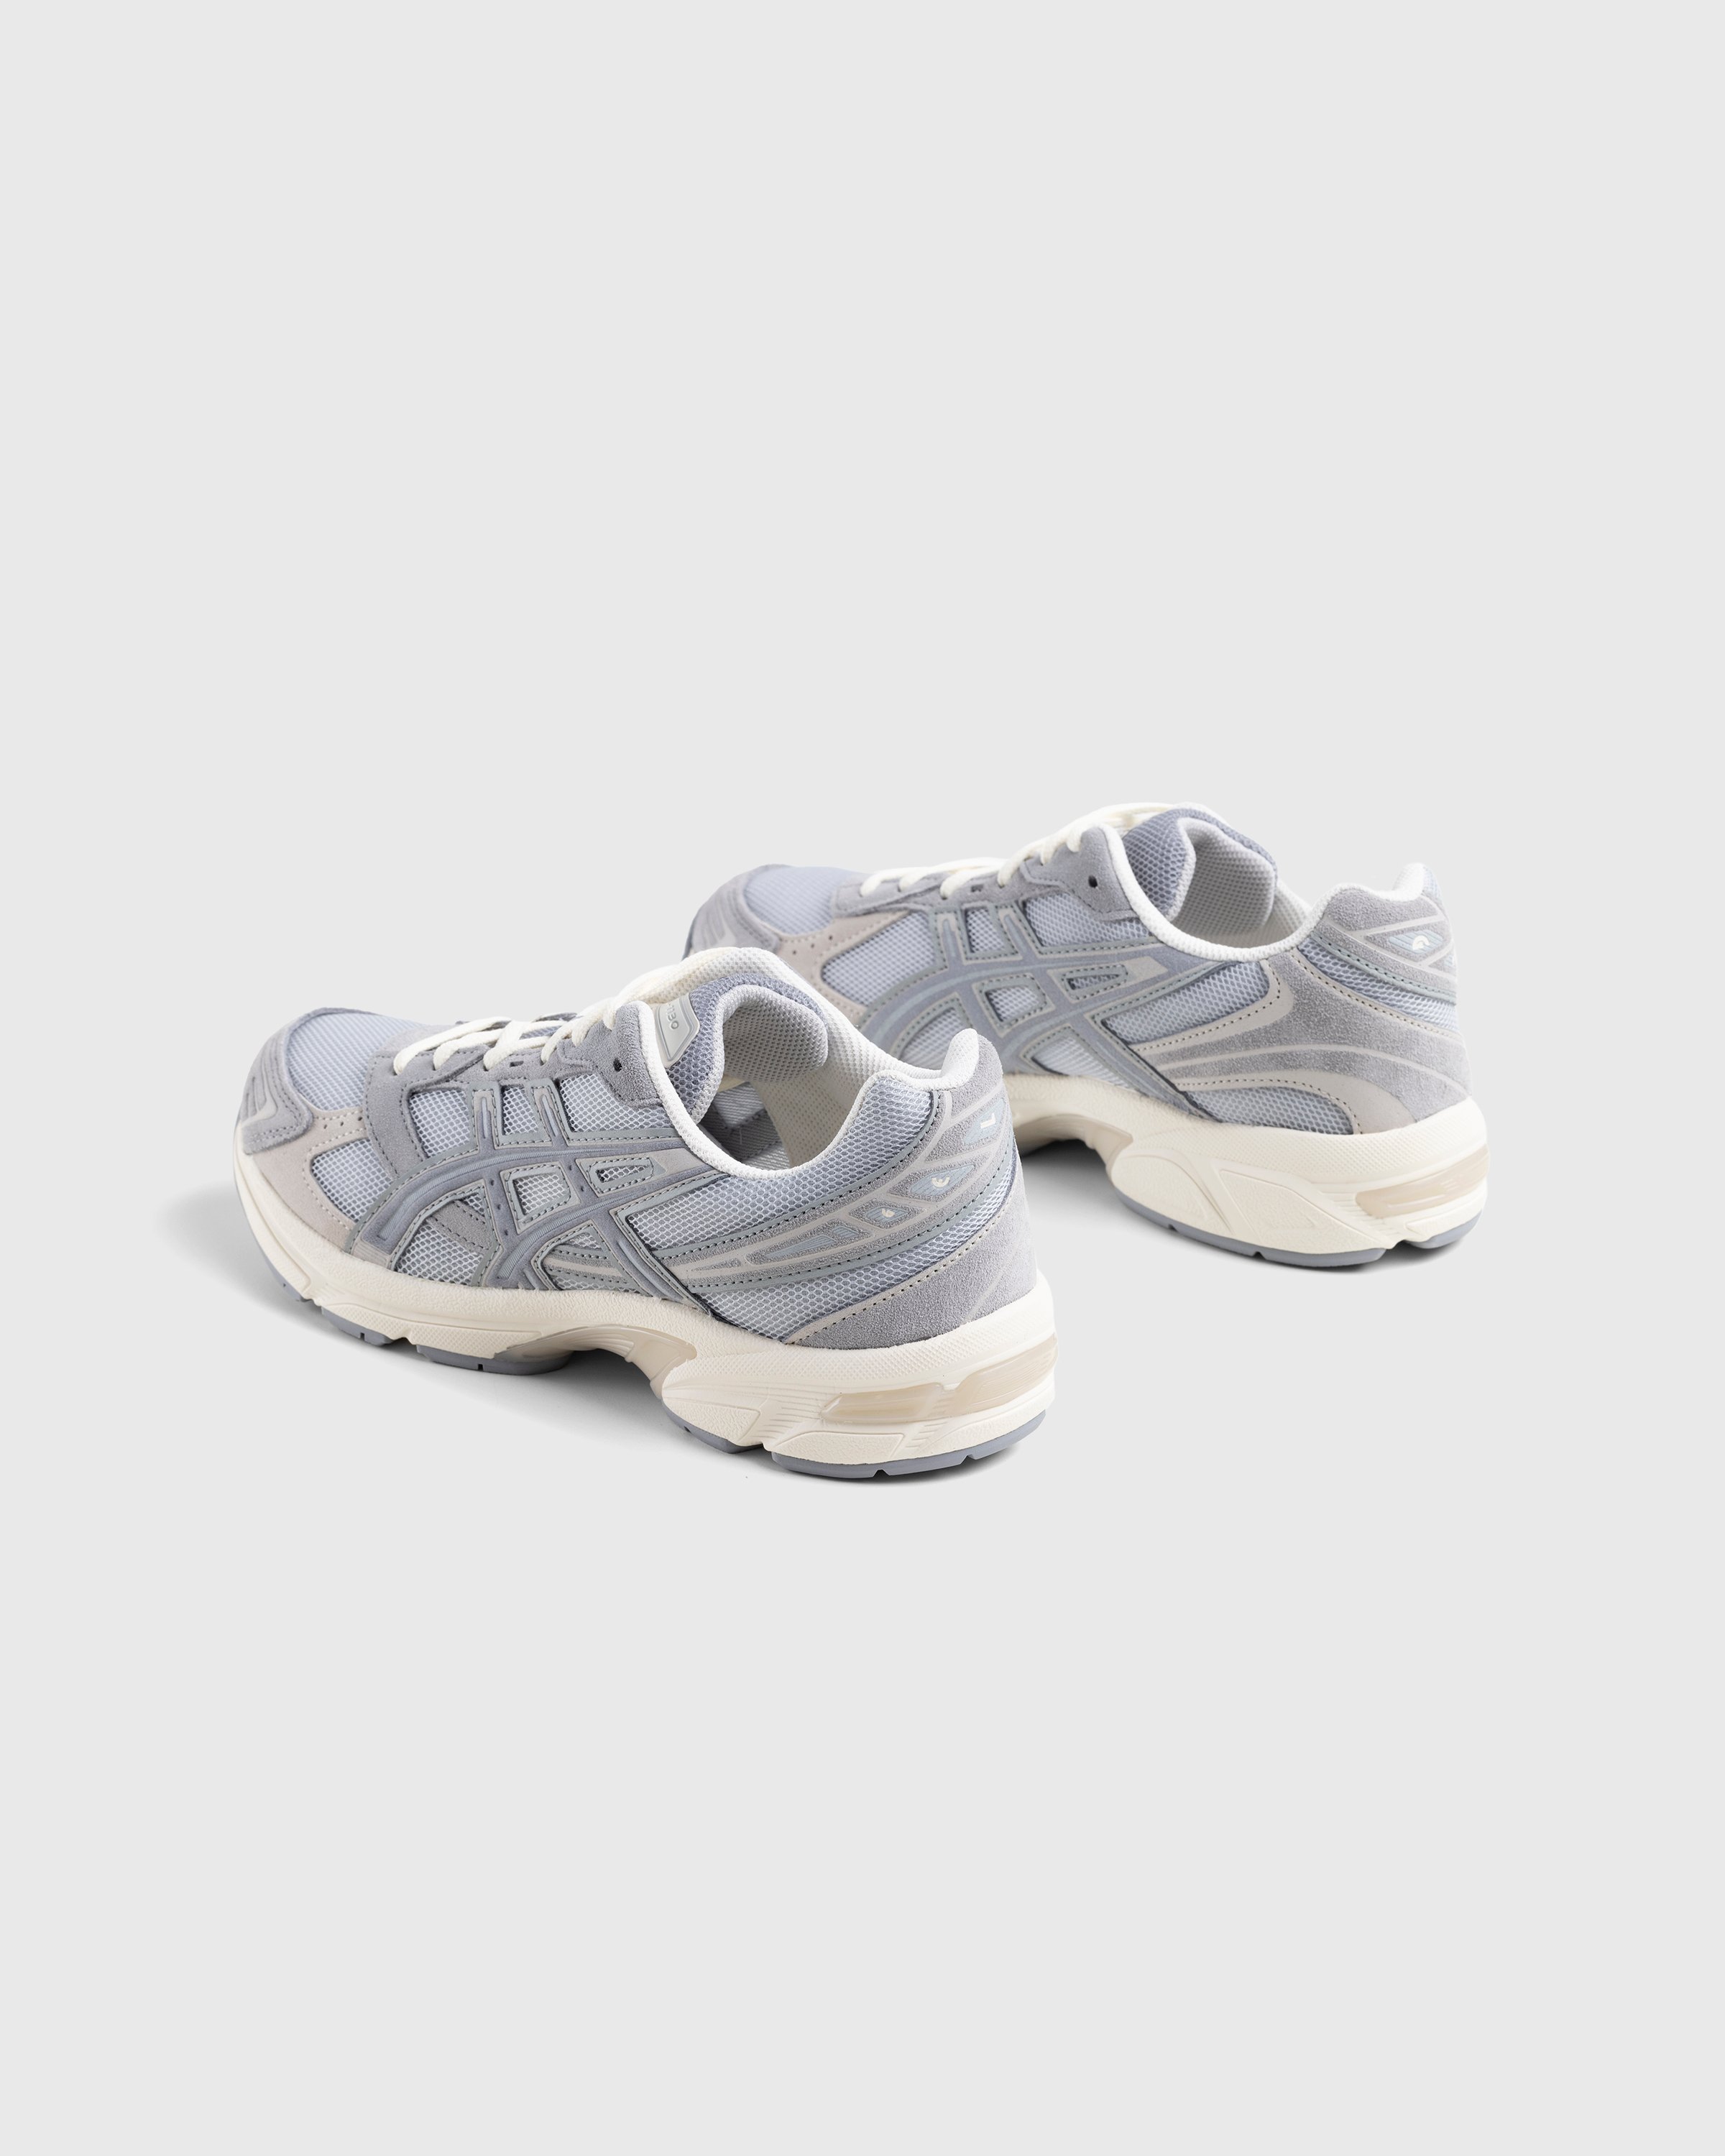 asics - Gel-1130 Piedmont Grey/Sheet Rock - Footwear - Grey - Image 4